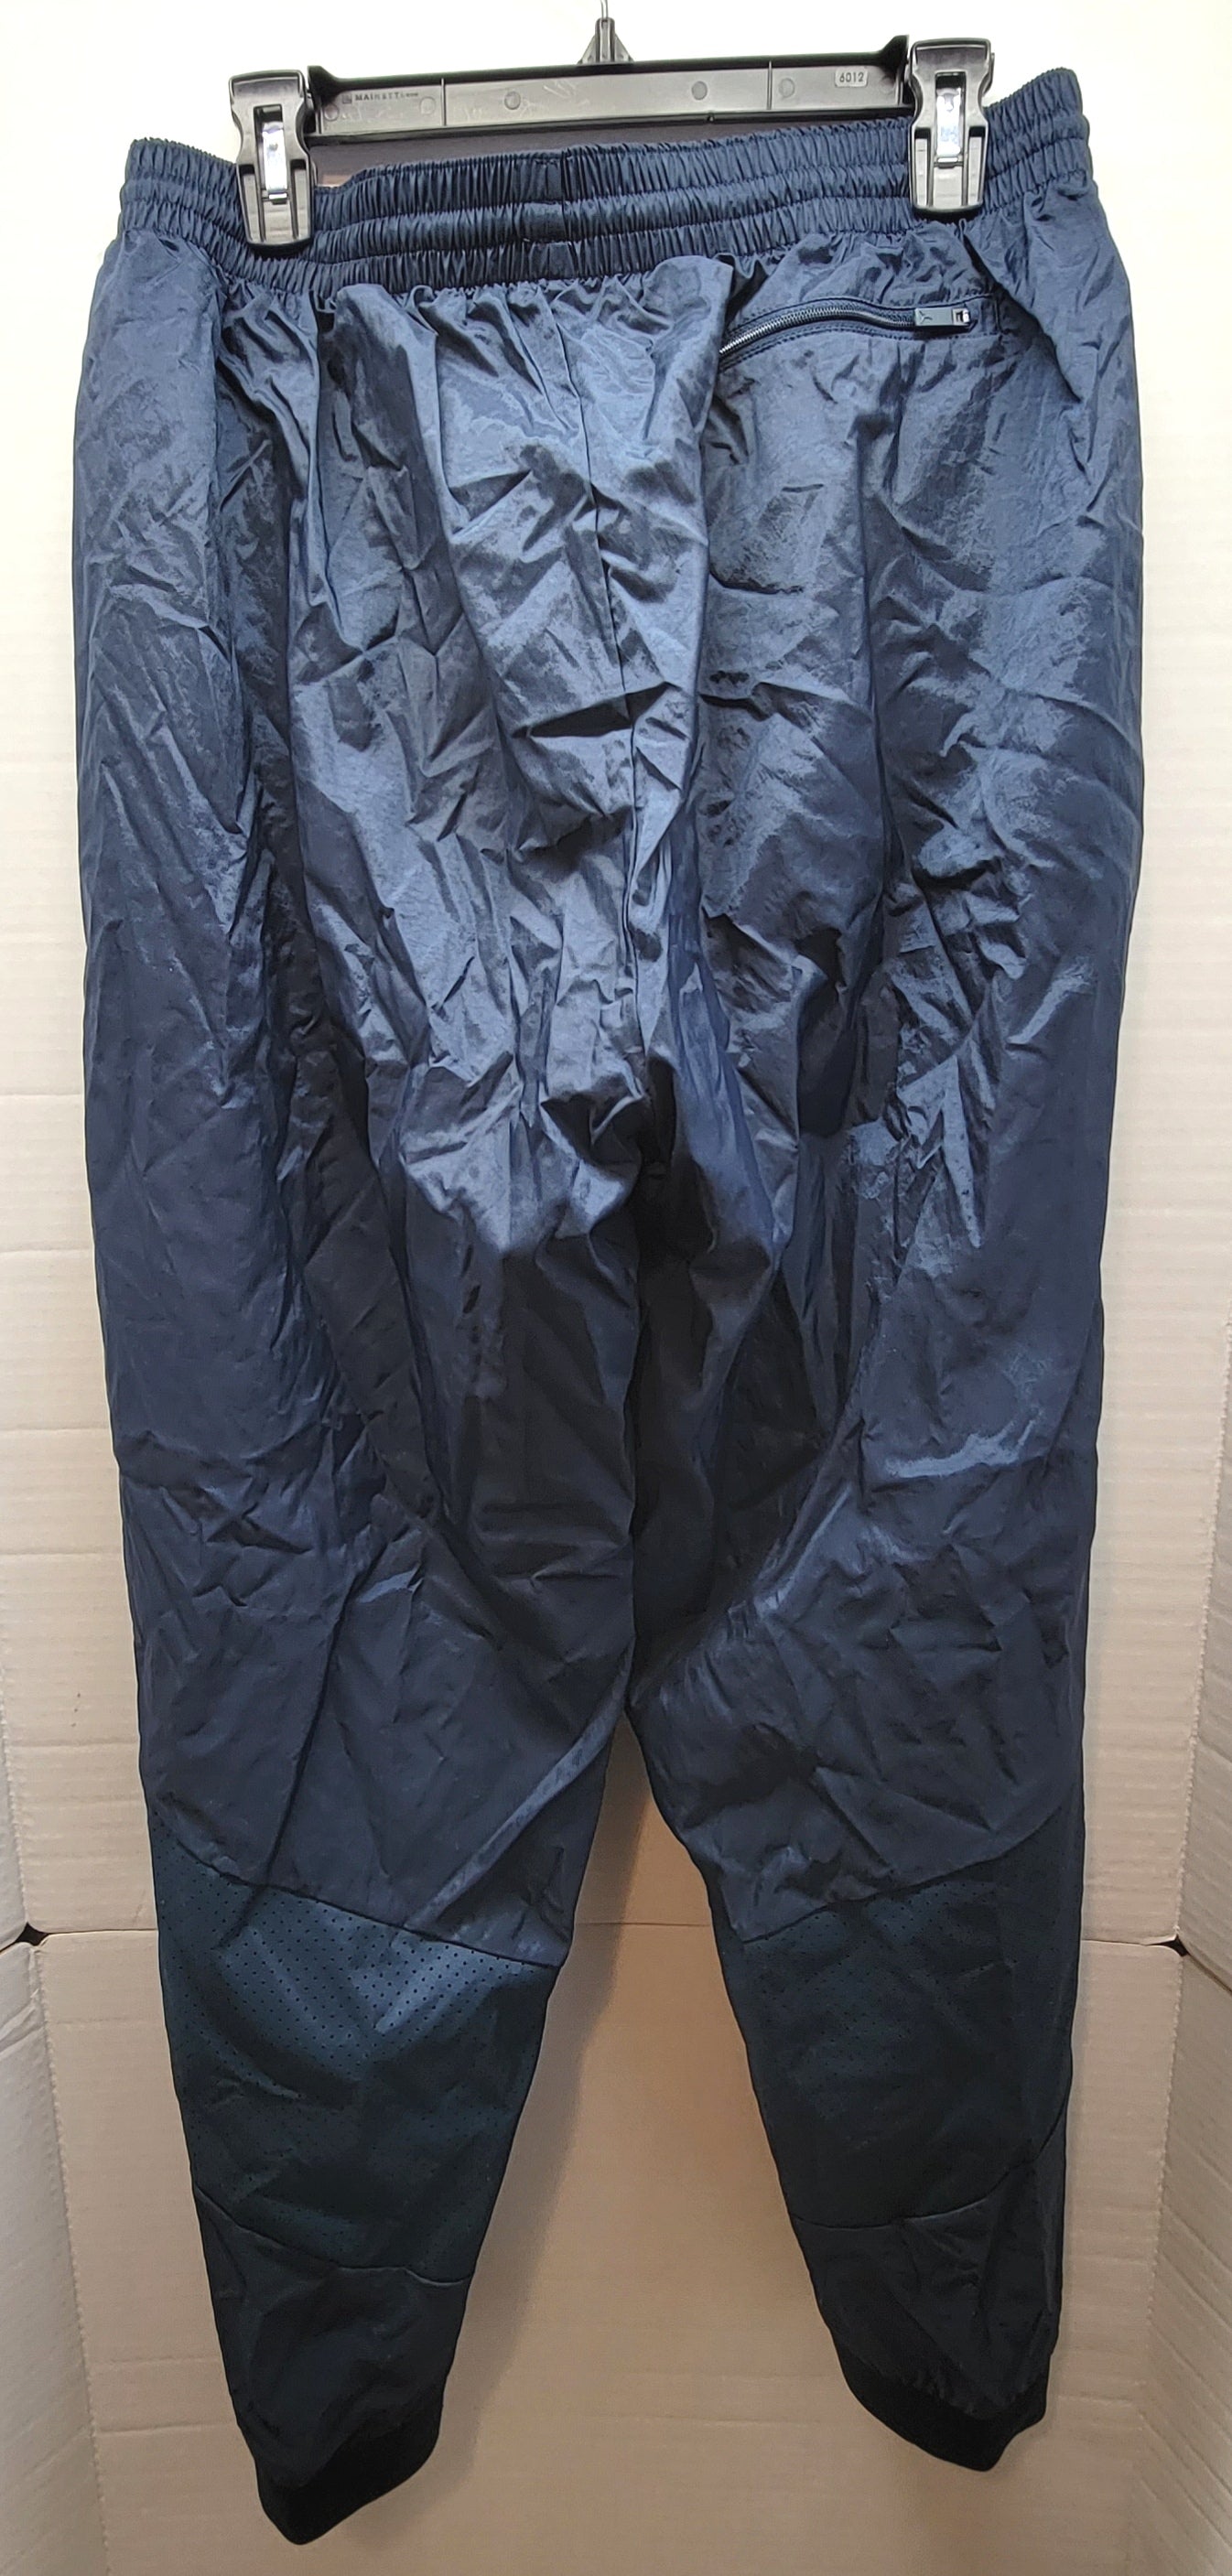 Nike Men's Active Wear Pants Size XL Navy Blue Retail $100.00